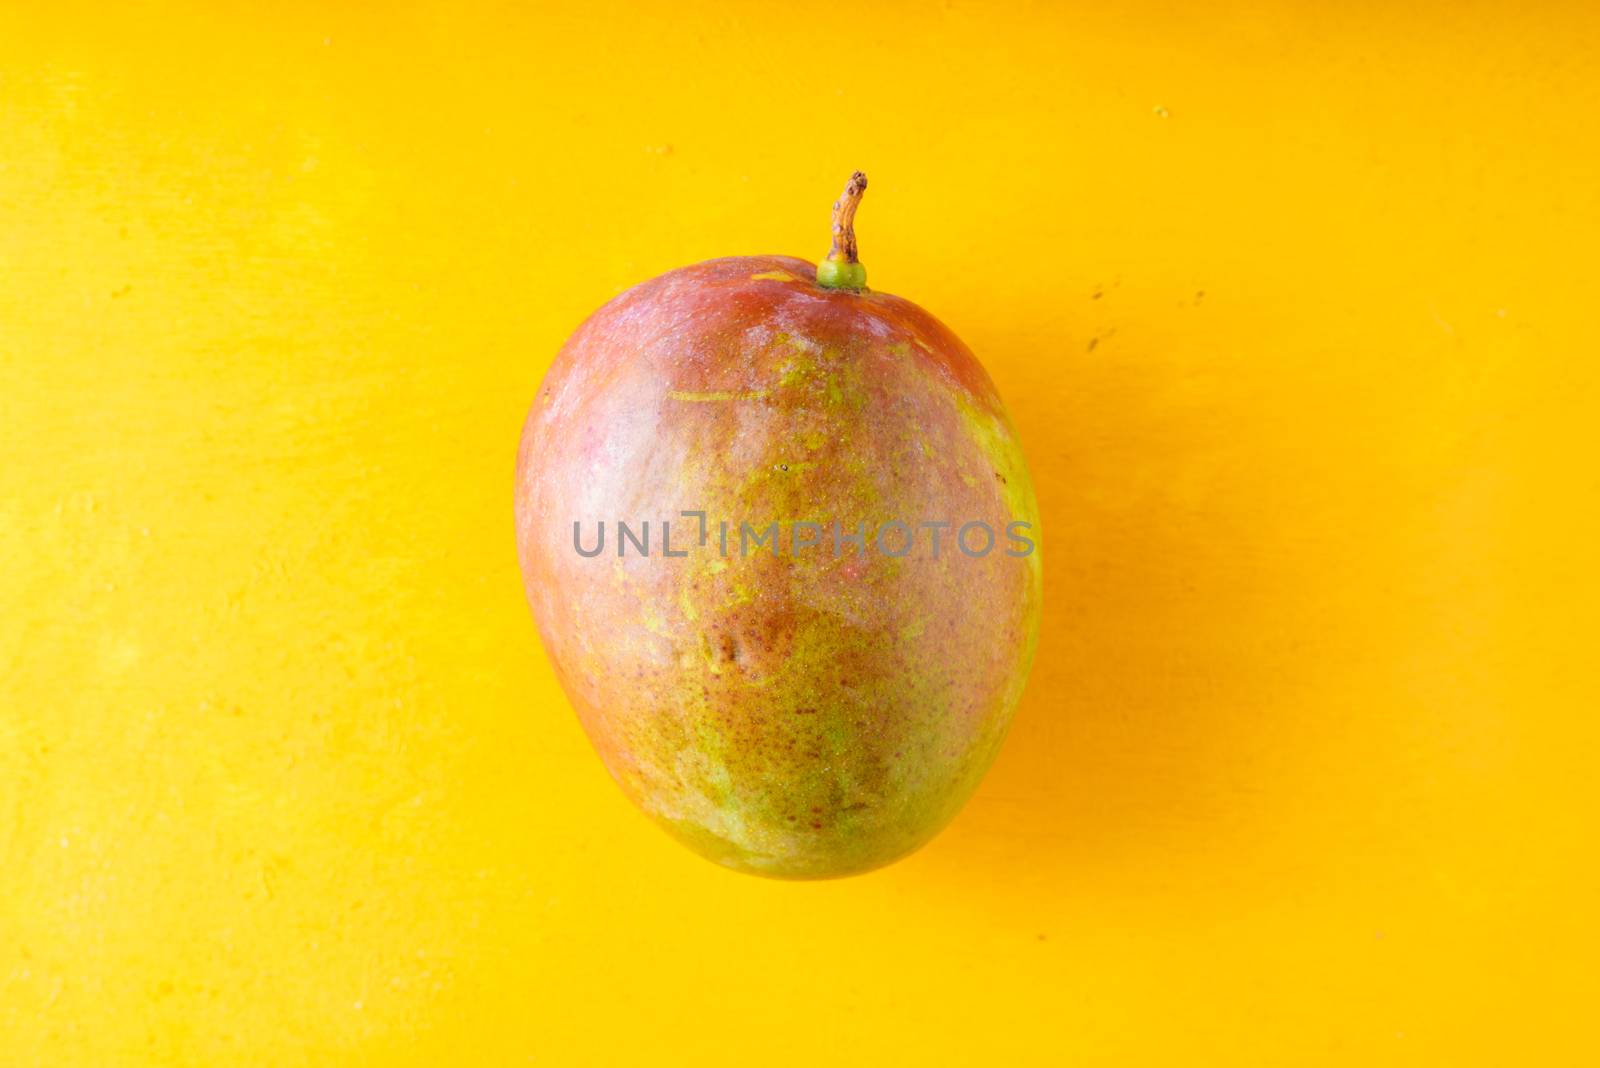 Mango on a yellow table by Deniskarpenkov